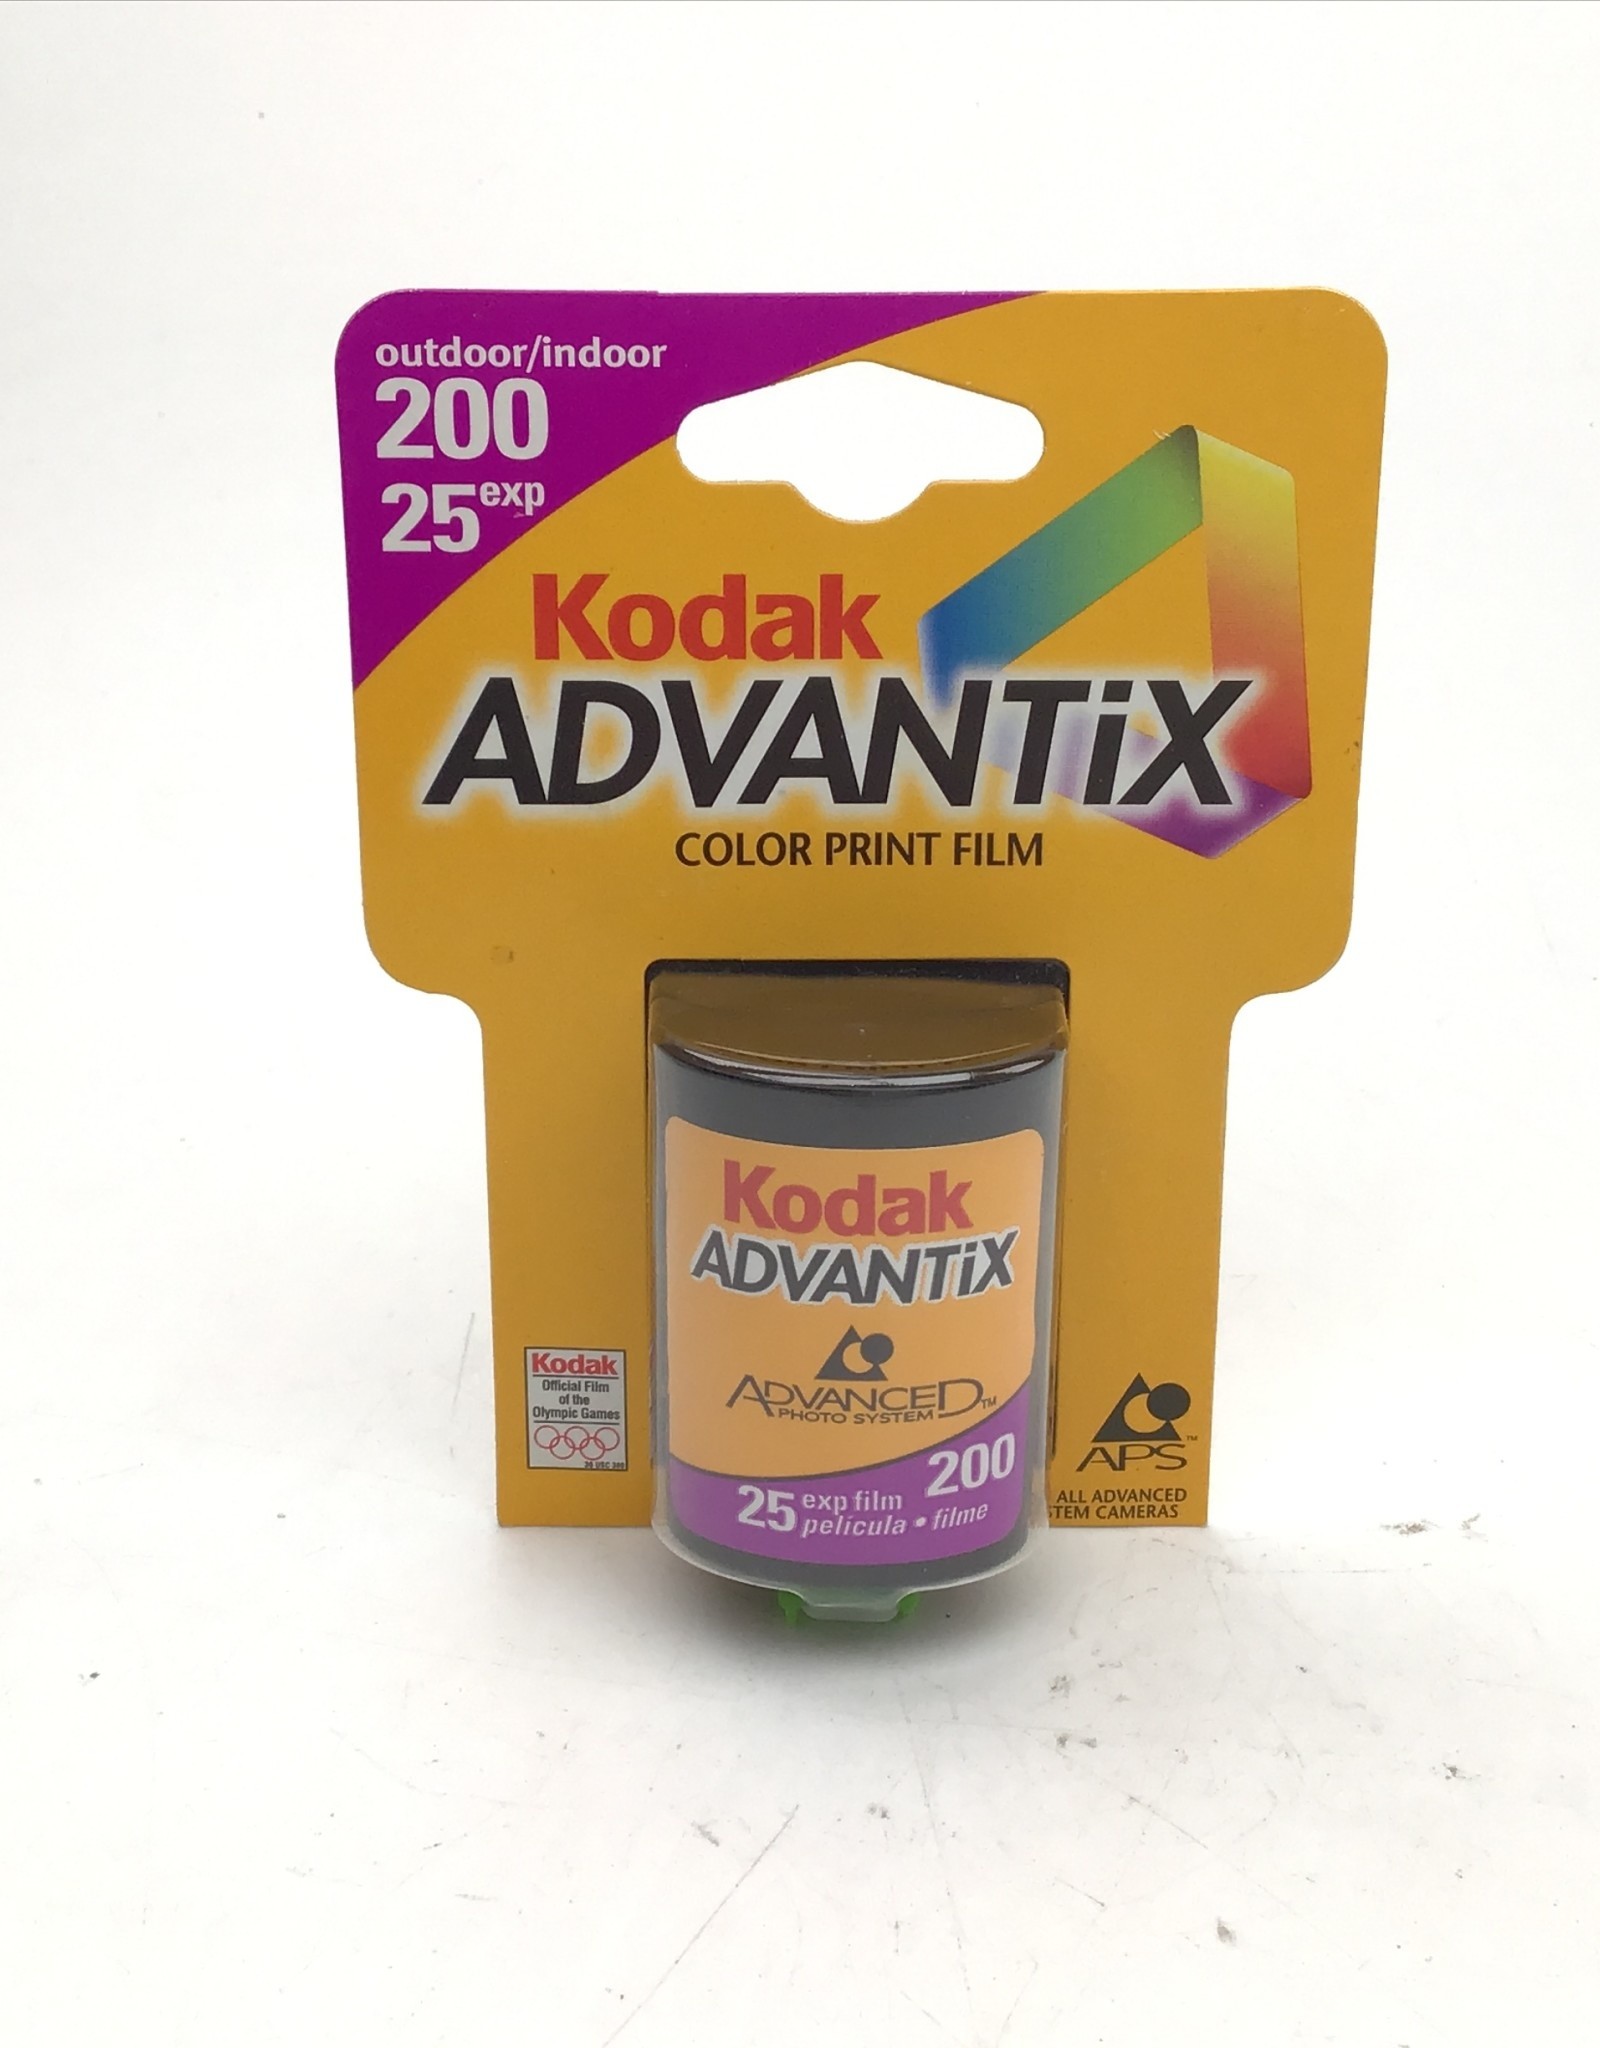 Kodak APS Advantix 200 ISP 25 Exposure Film Expired 05/2003